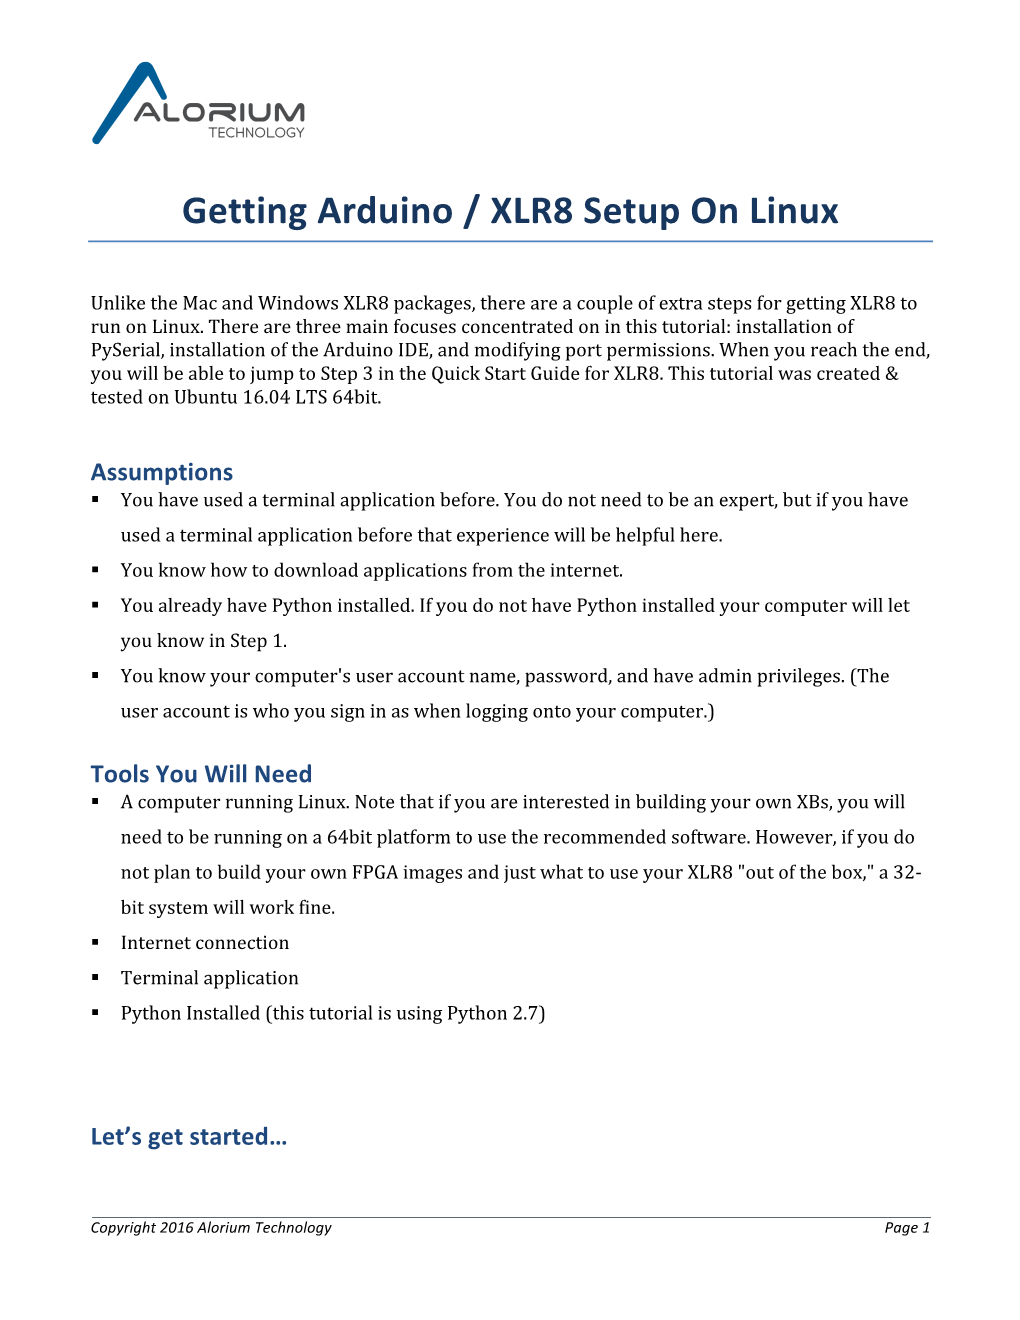 Getting Arduino / XLR8 Setup on Linux